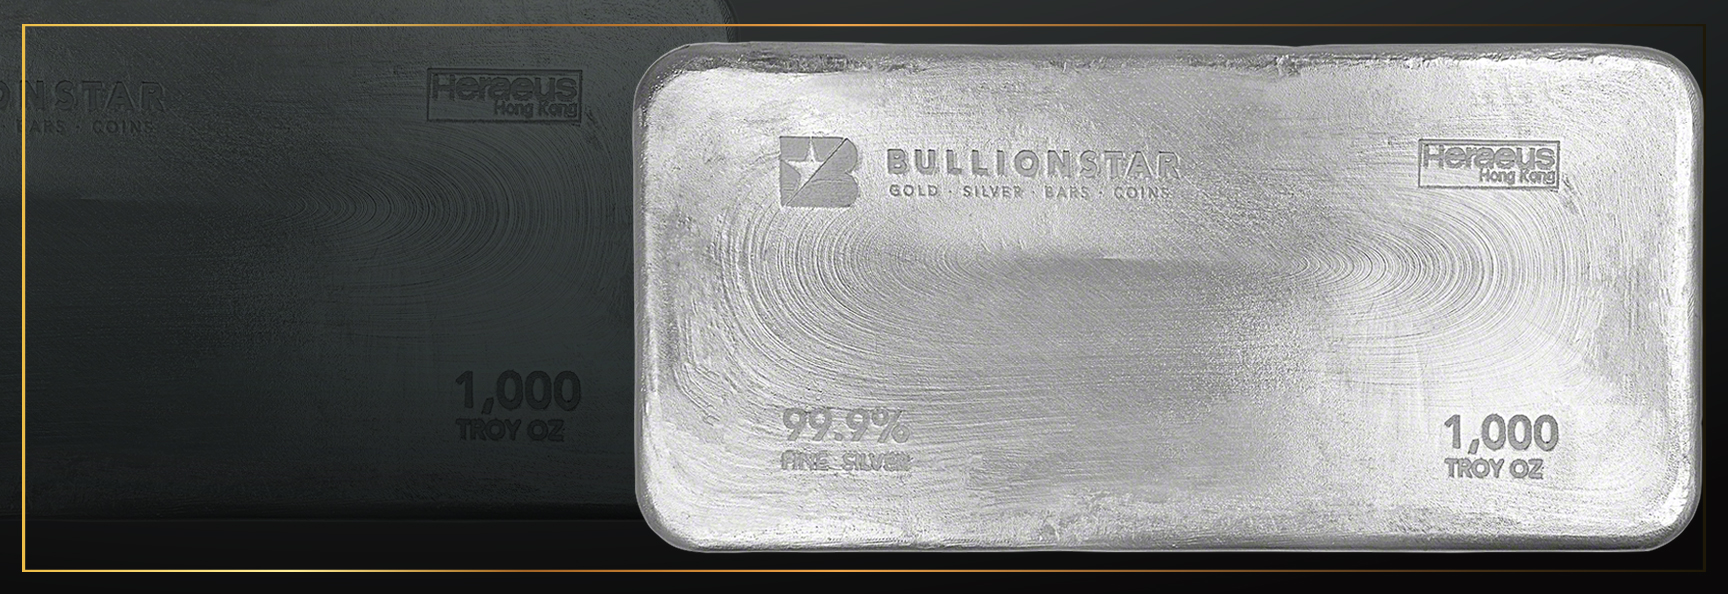 BullionStar Heraeus Silver Bar for only spot + 2.99%! 